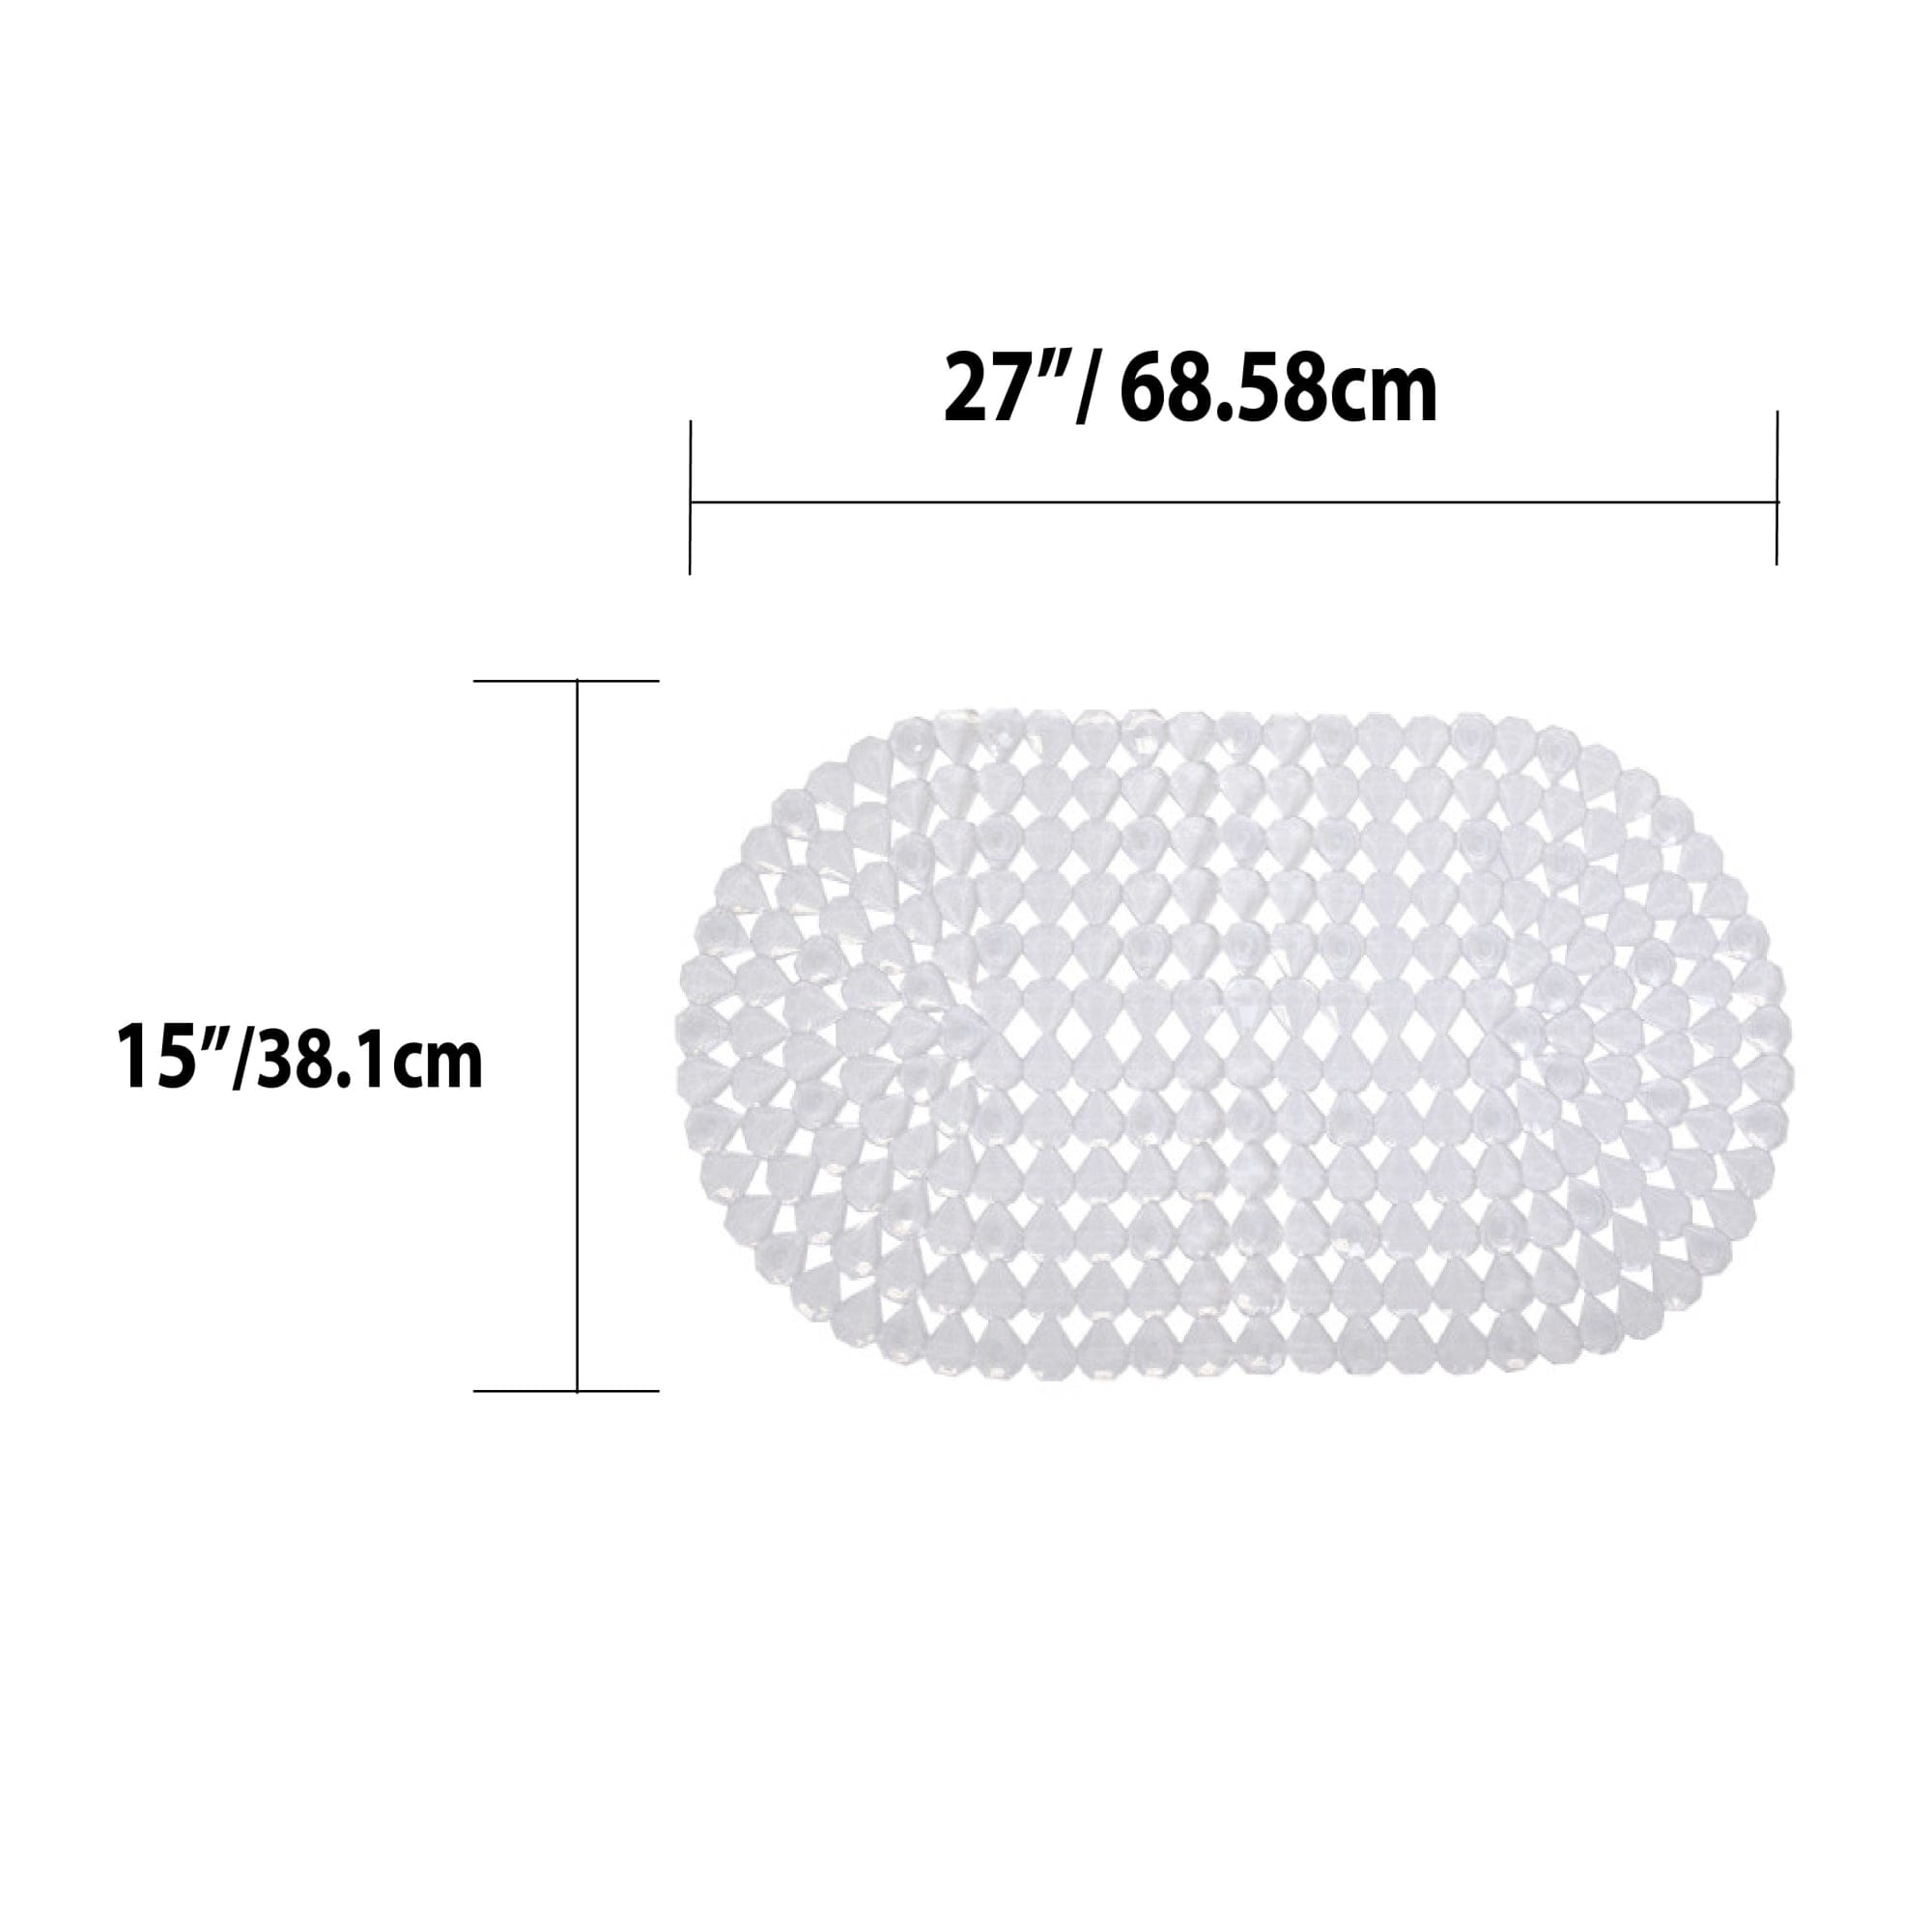 Home Basics Diamond Plastic Bath Mat, Clear $4.00 EACH, CASE PACK OF 12